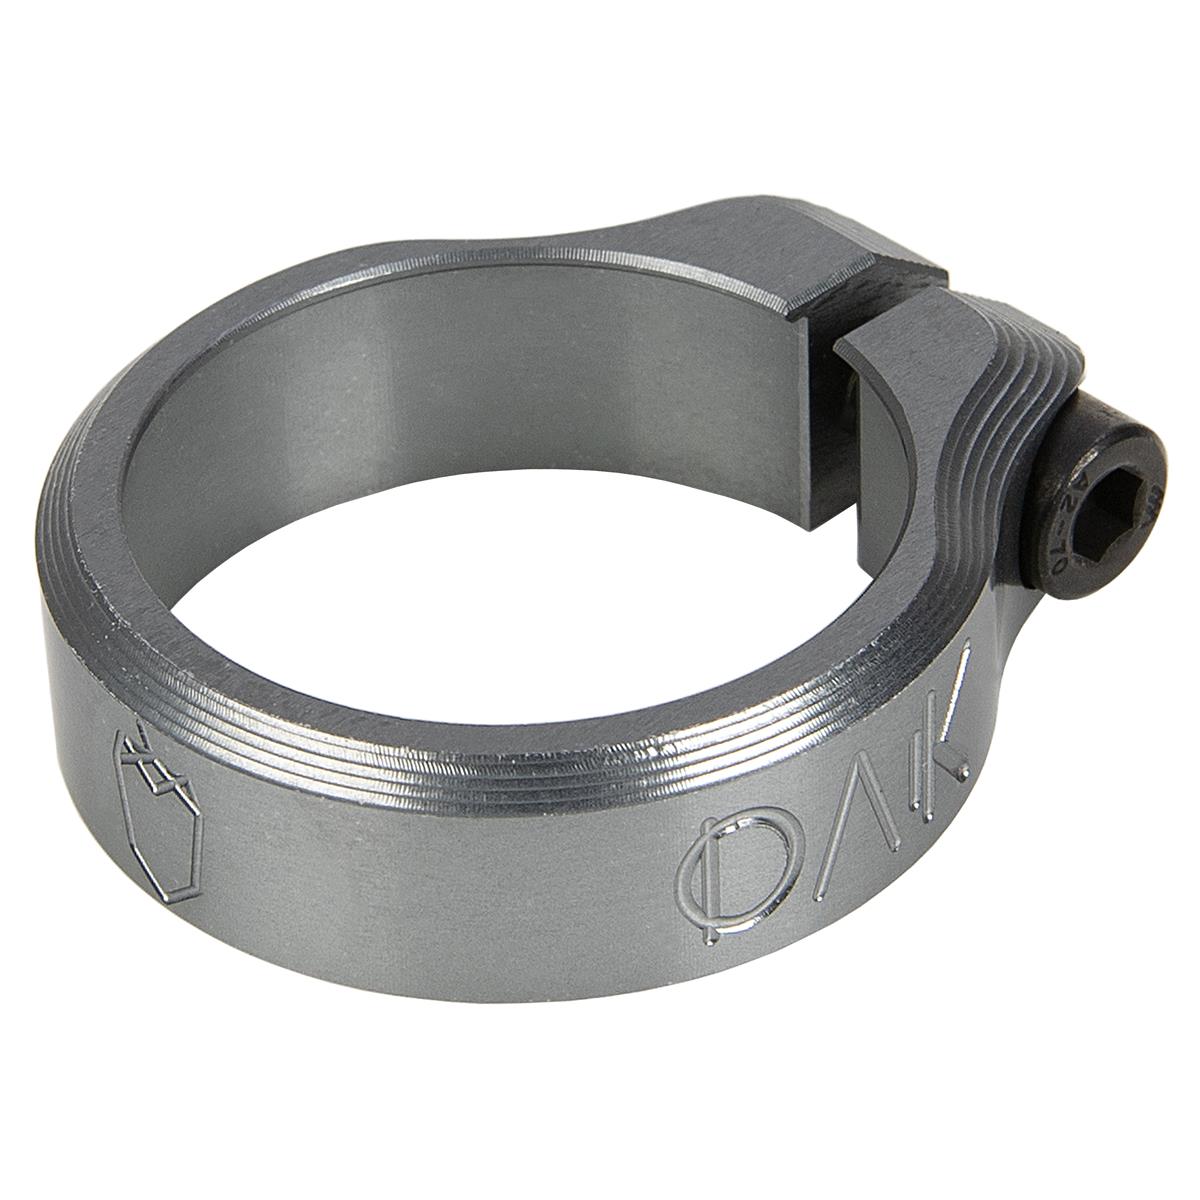 OAK Components Collarino Reggisella Orbit Lunargray, 34.9 mm / 36.4 mm / 38.6 mm